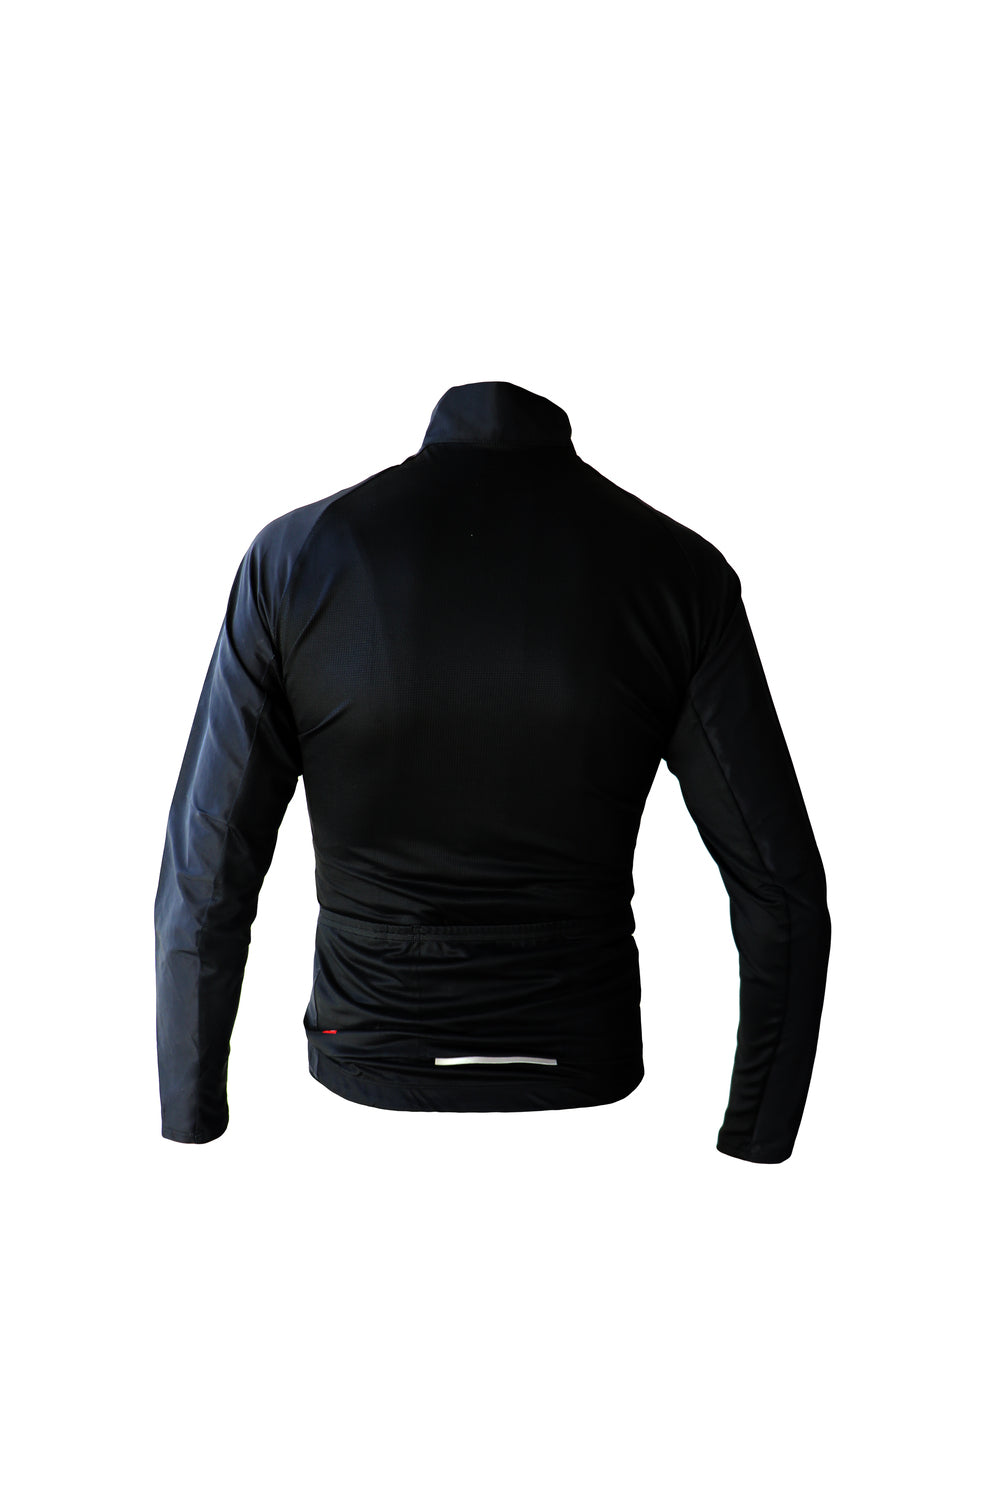 Bike textile - Long sleeved jacket, black and white windbreaker